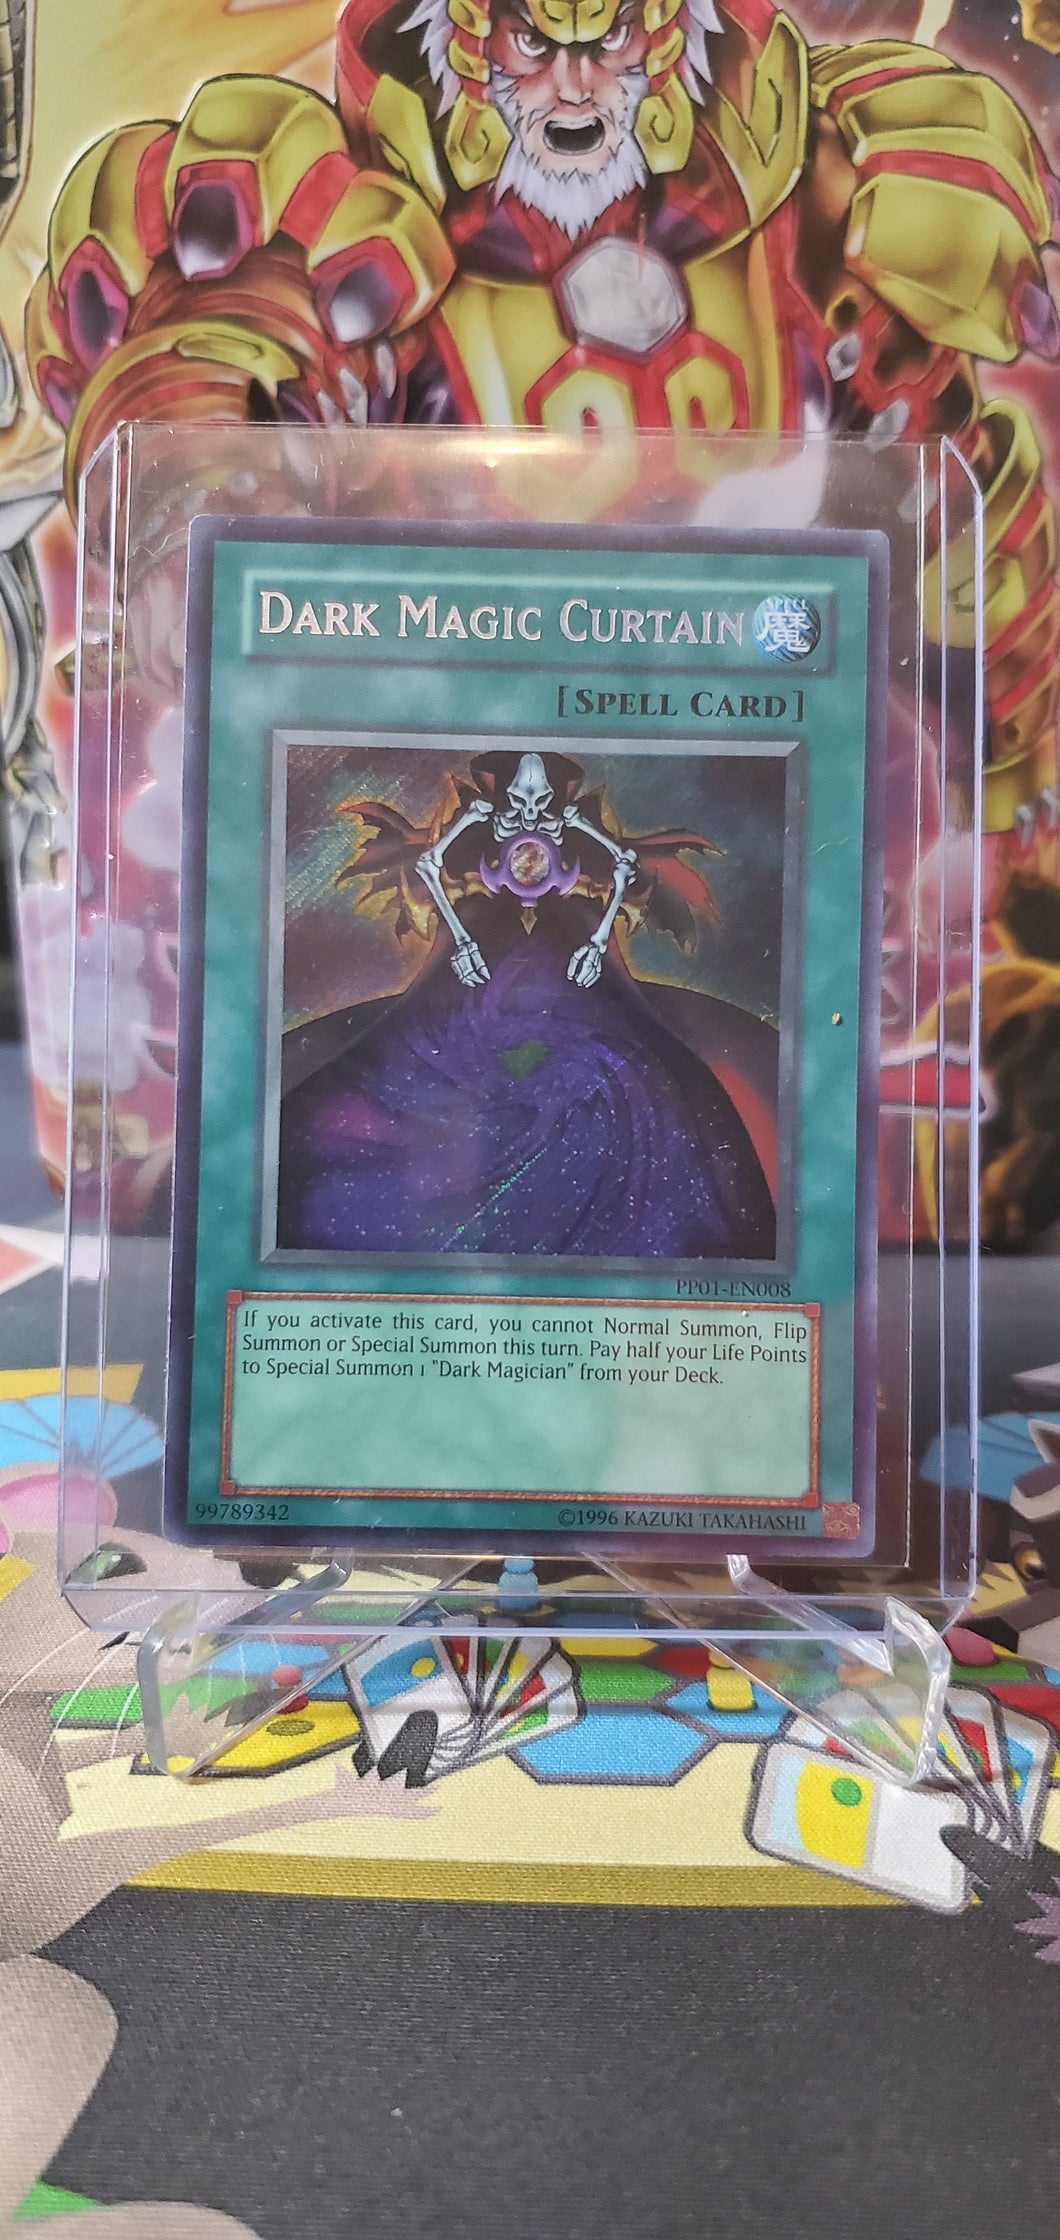 Dark Magic Curtain